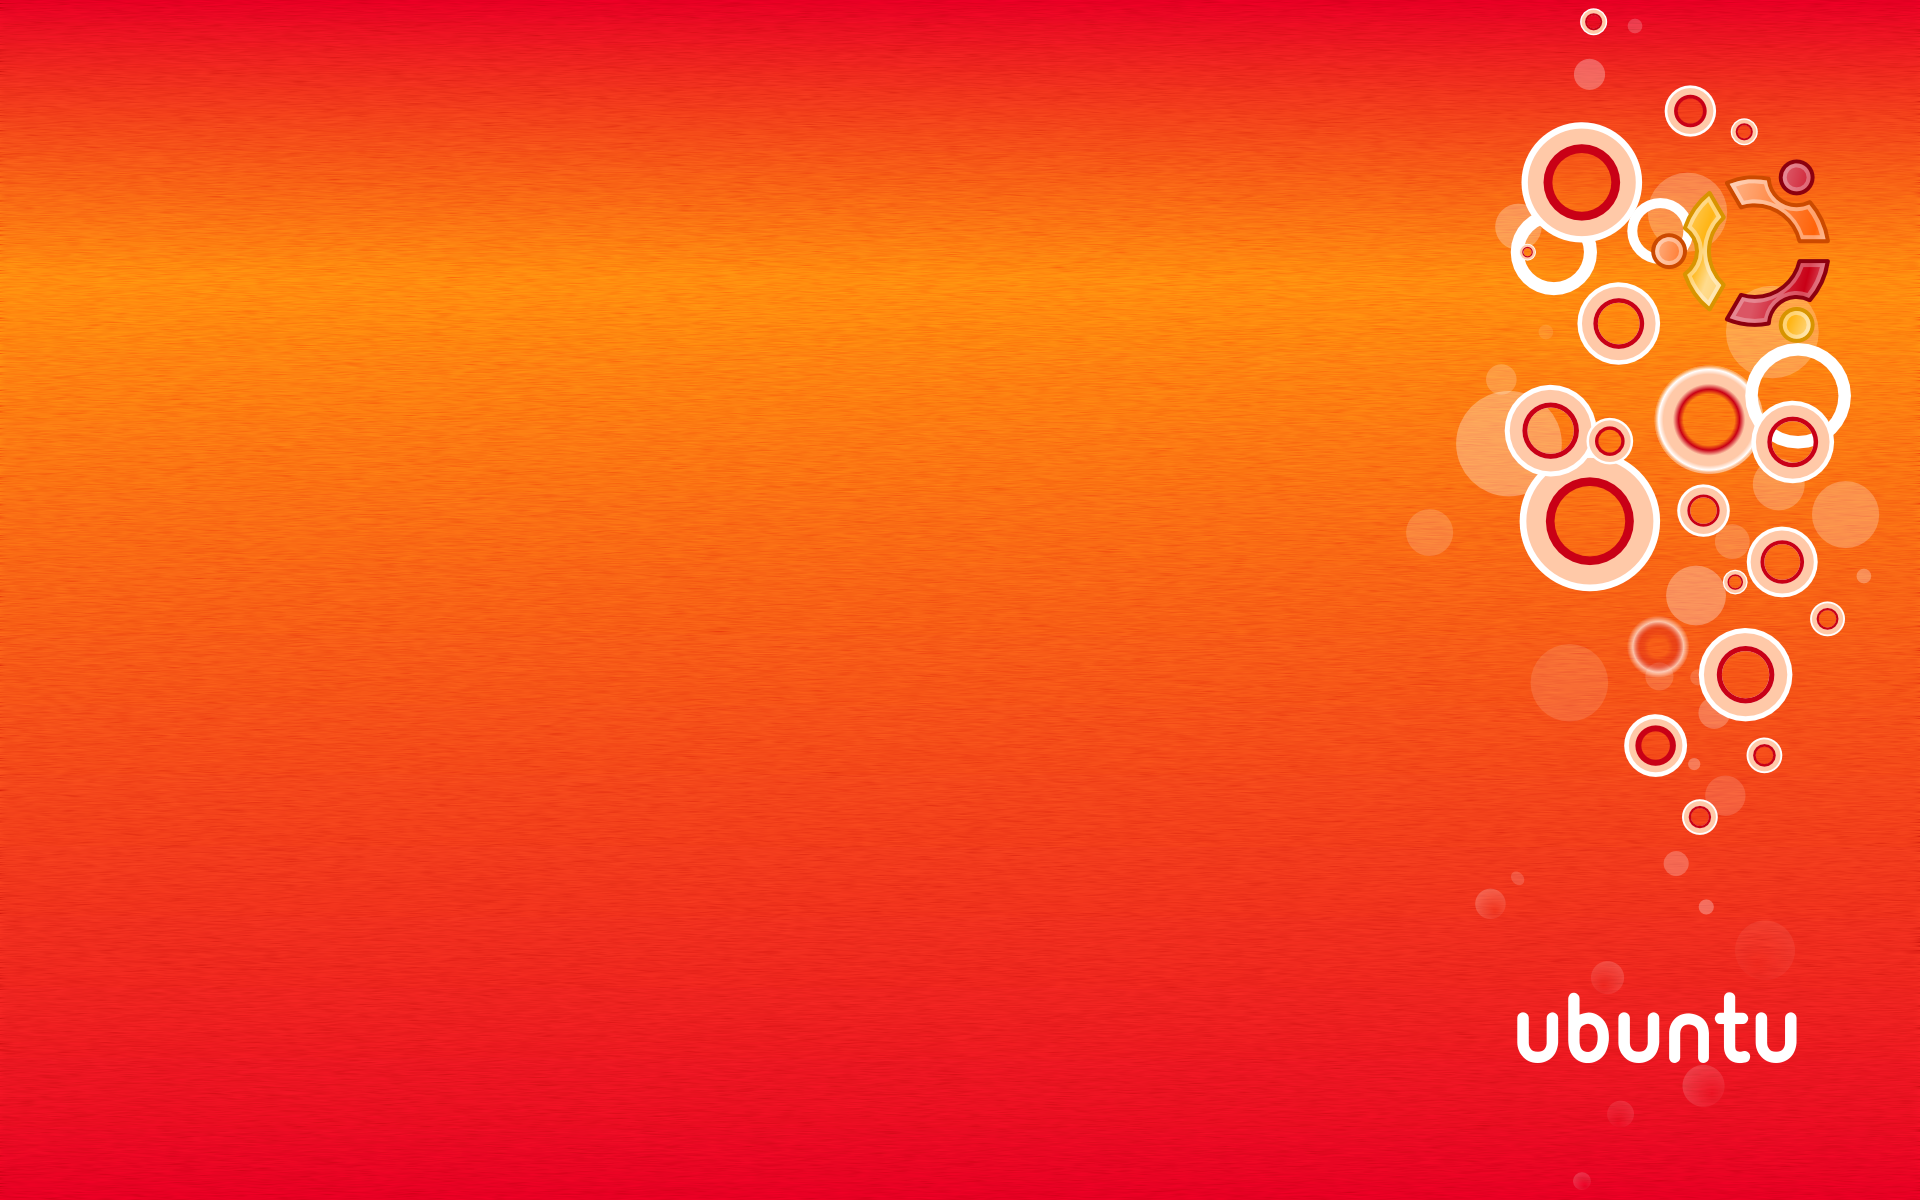 ubuntu wallpaper orange cool